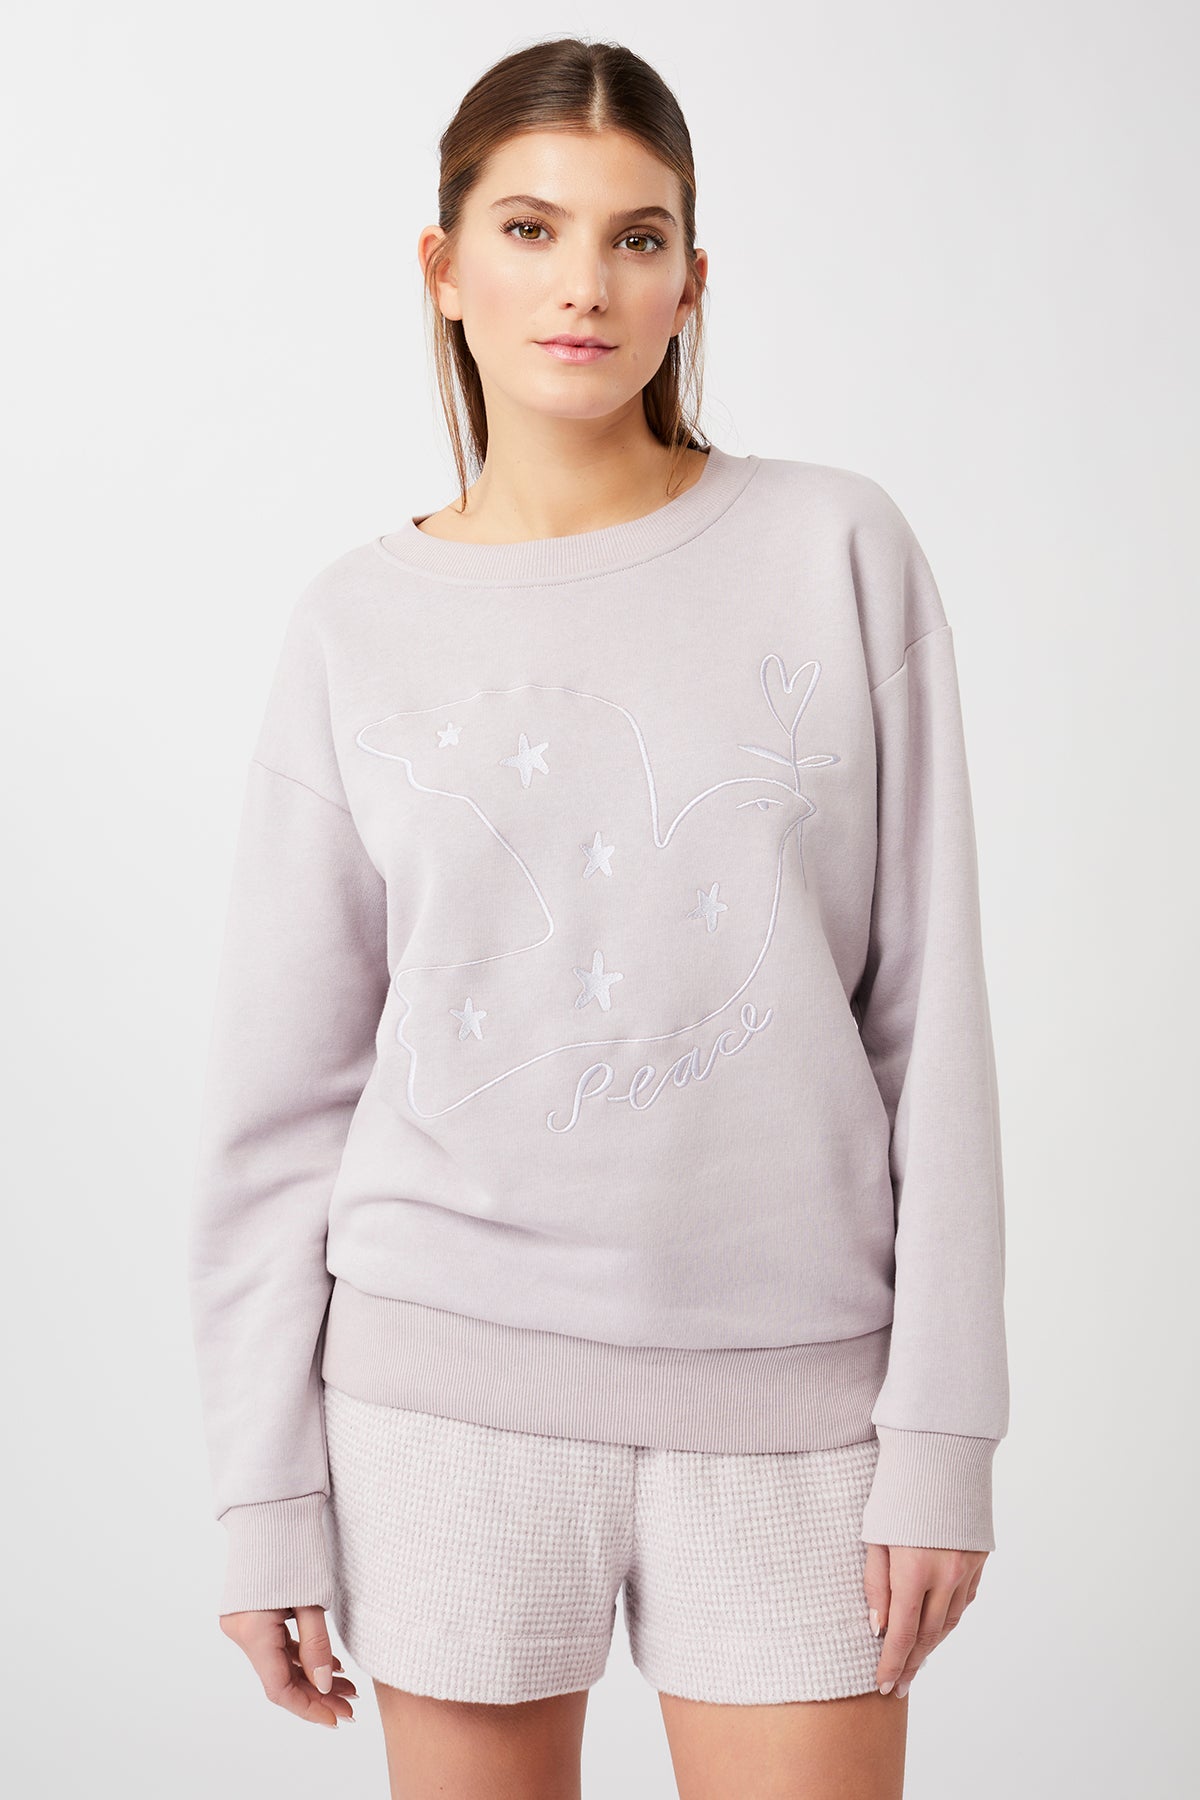 Mandala Yoga Pullover Rose Front - Peace Sweater